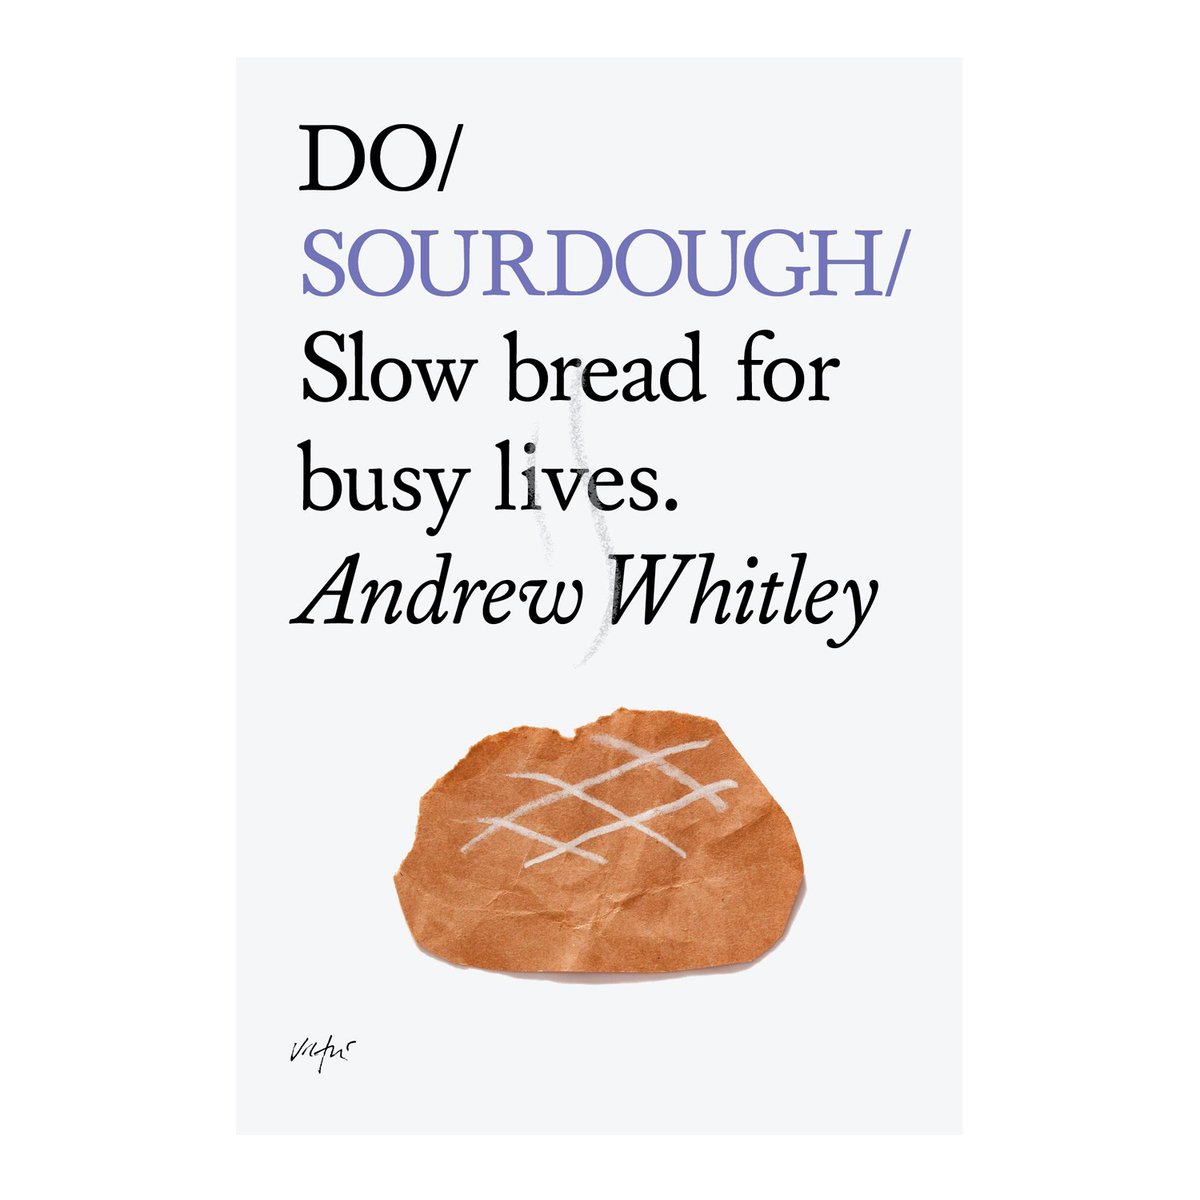 Design　Sourdough　busy　Book　for　Shop　Slow　lives　Co　Do　The　Finnish　Do　bread